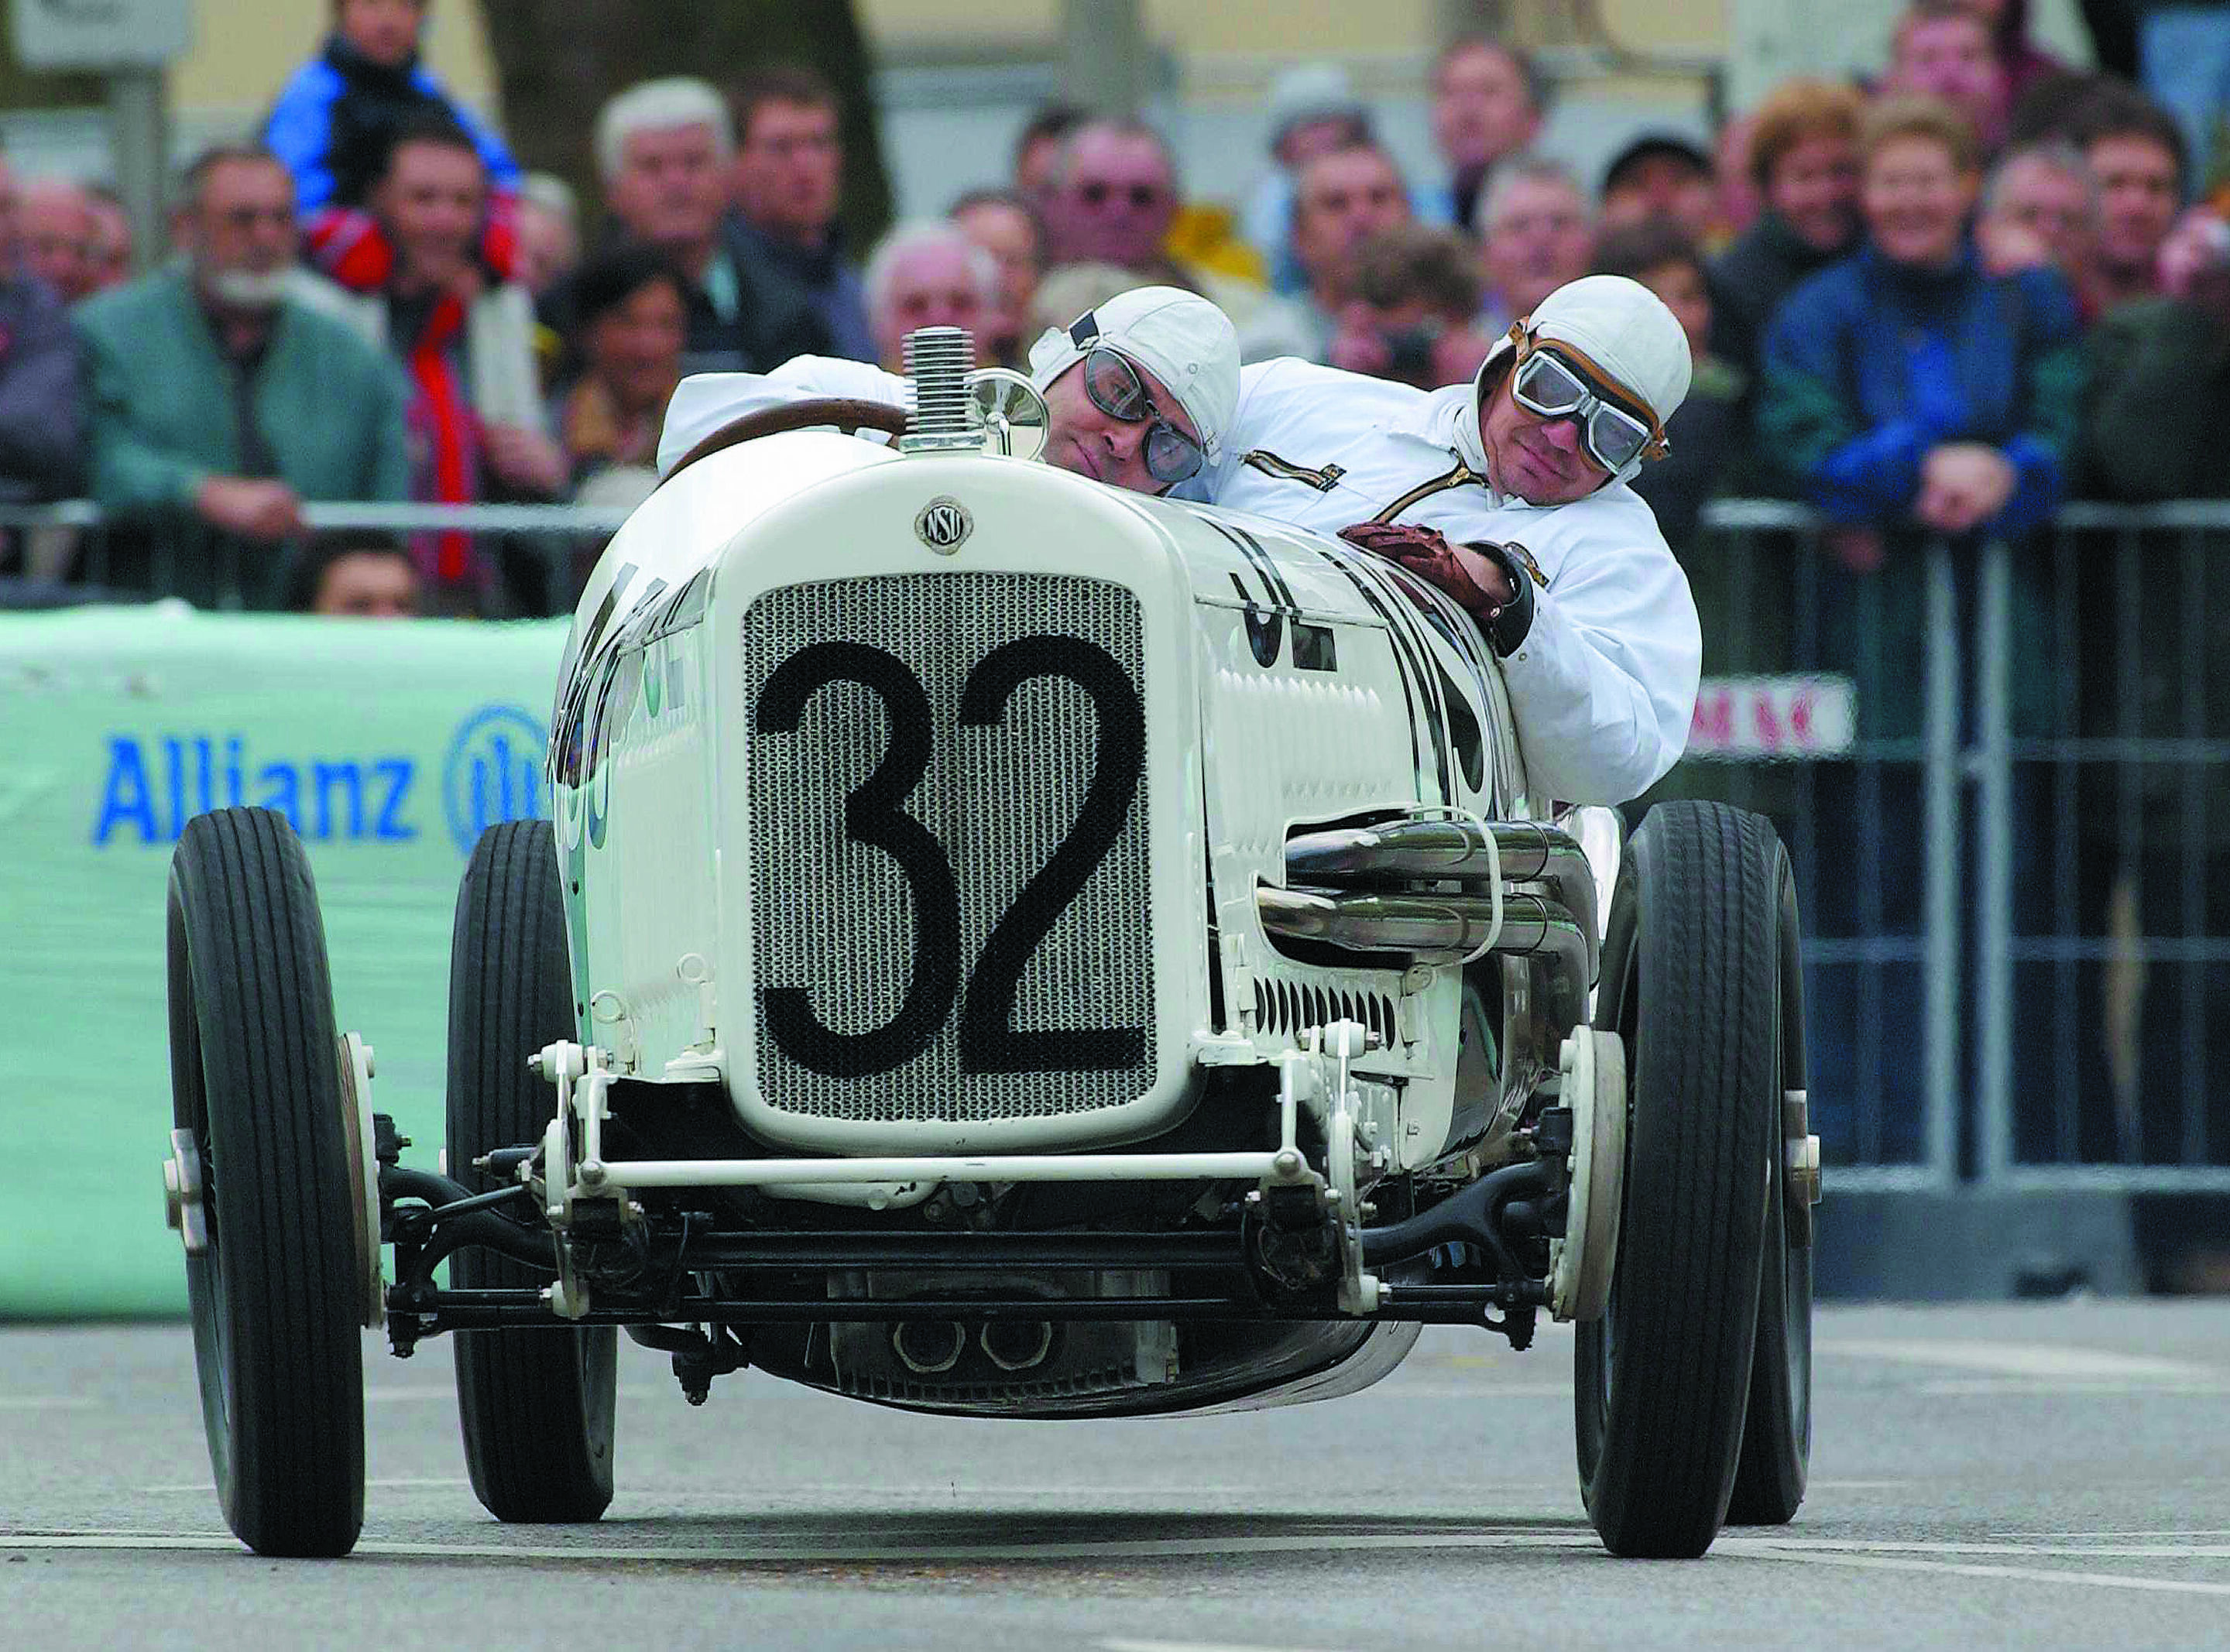 Starting at Eifel-Klassik 2002 on Nürburgring: The oldest Grand Prix racing car belonging to AUDI AG, the NSU 6/60 supercharged racing car built in 1926.